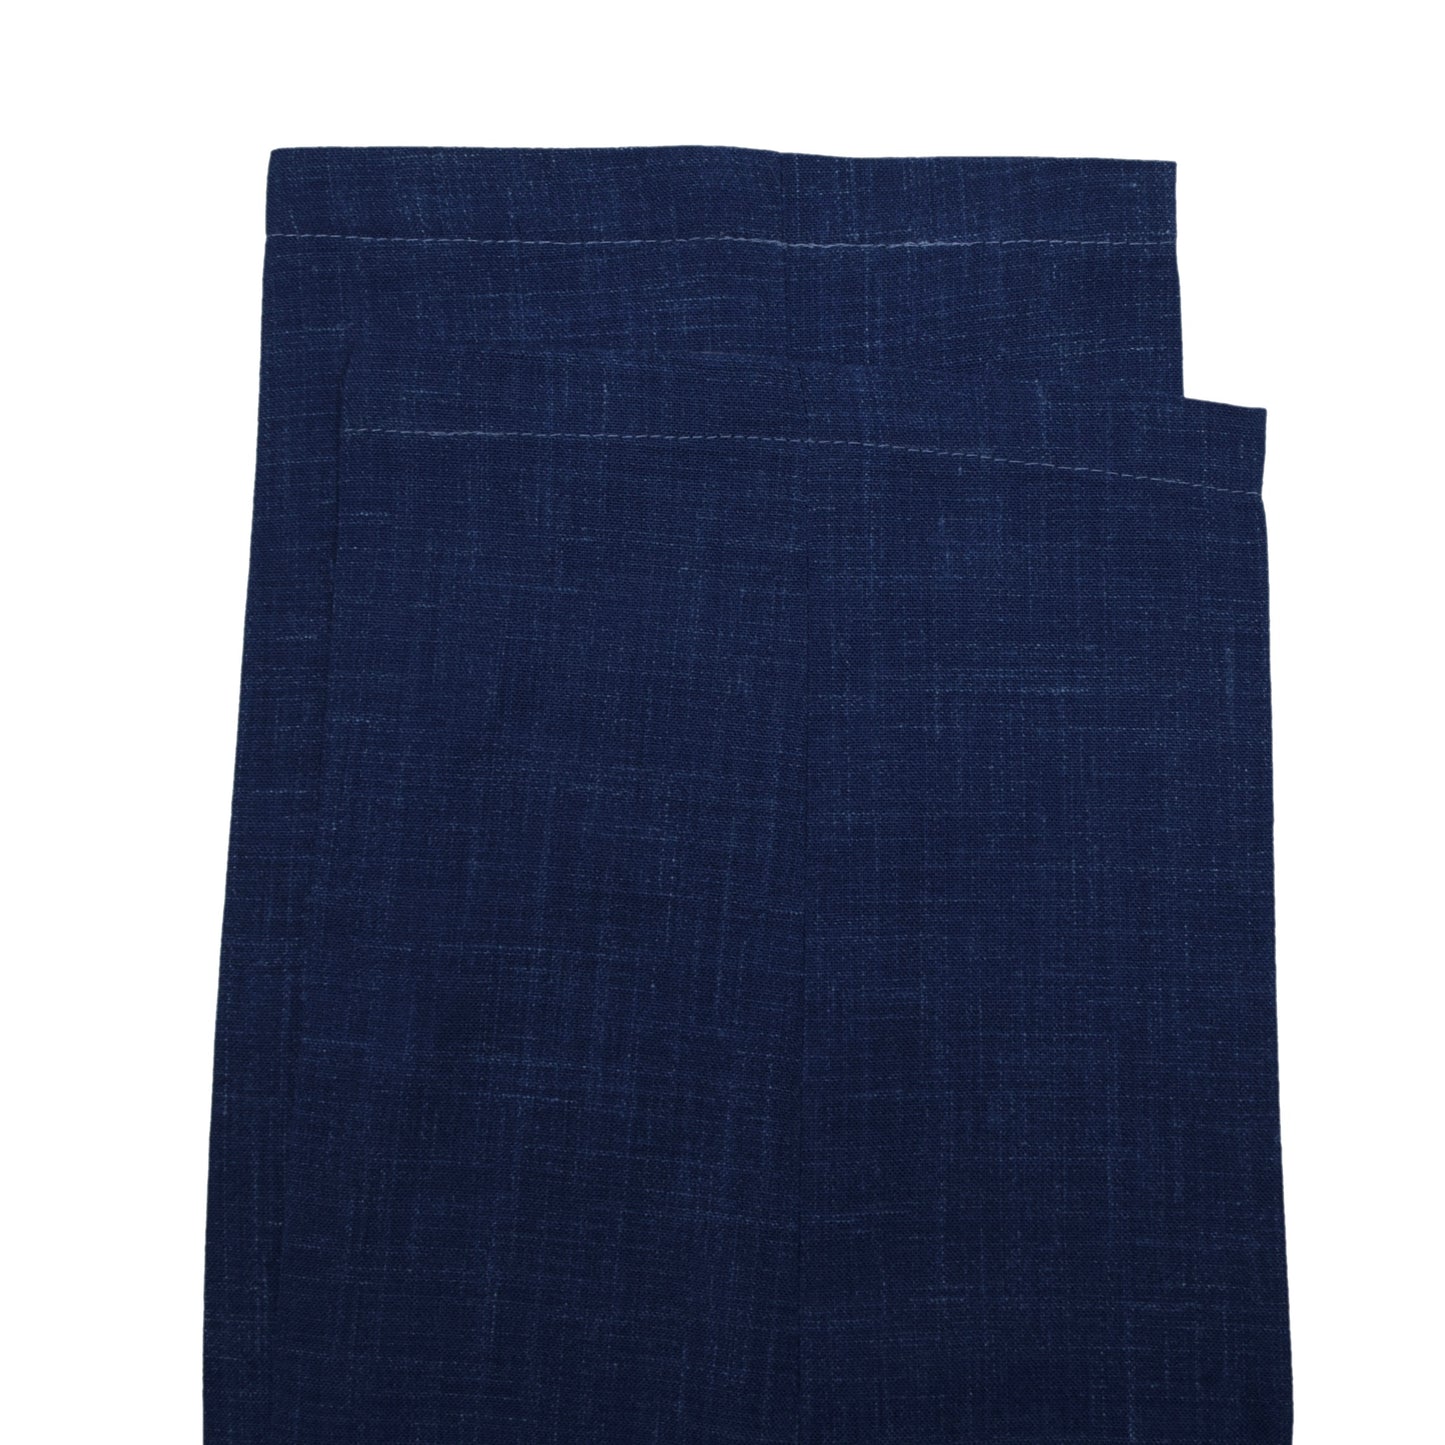 Kiton Napoli Hose Wolle-Seide-Leinen Größe 38 - Königsblau